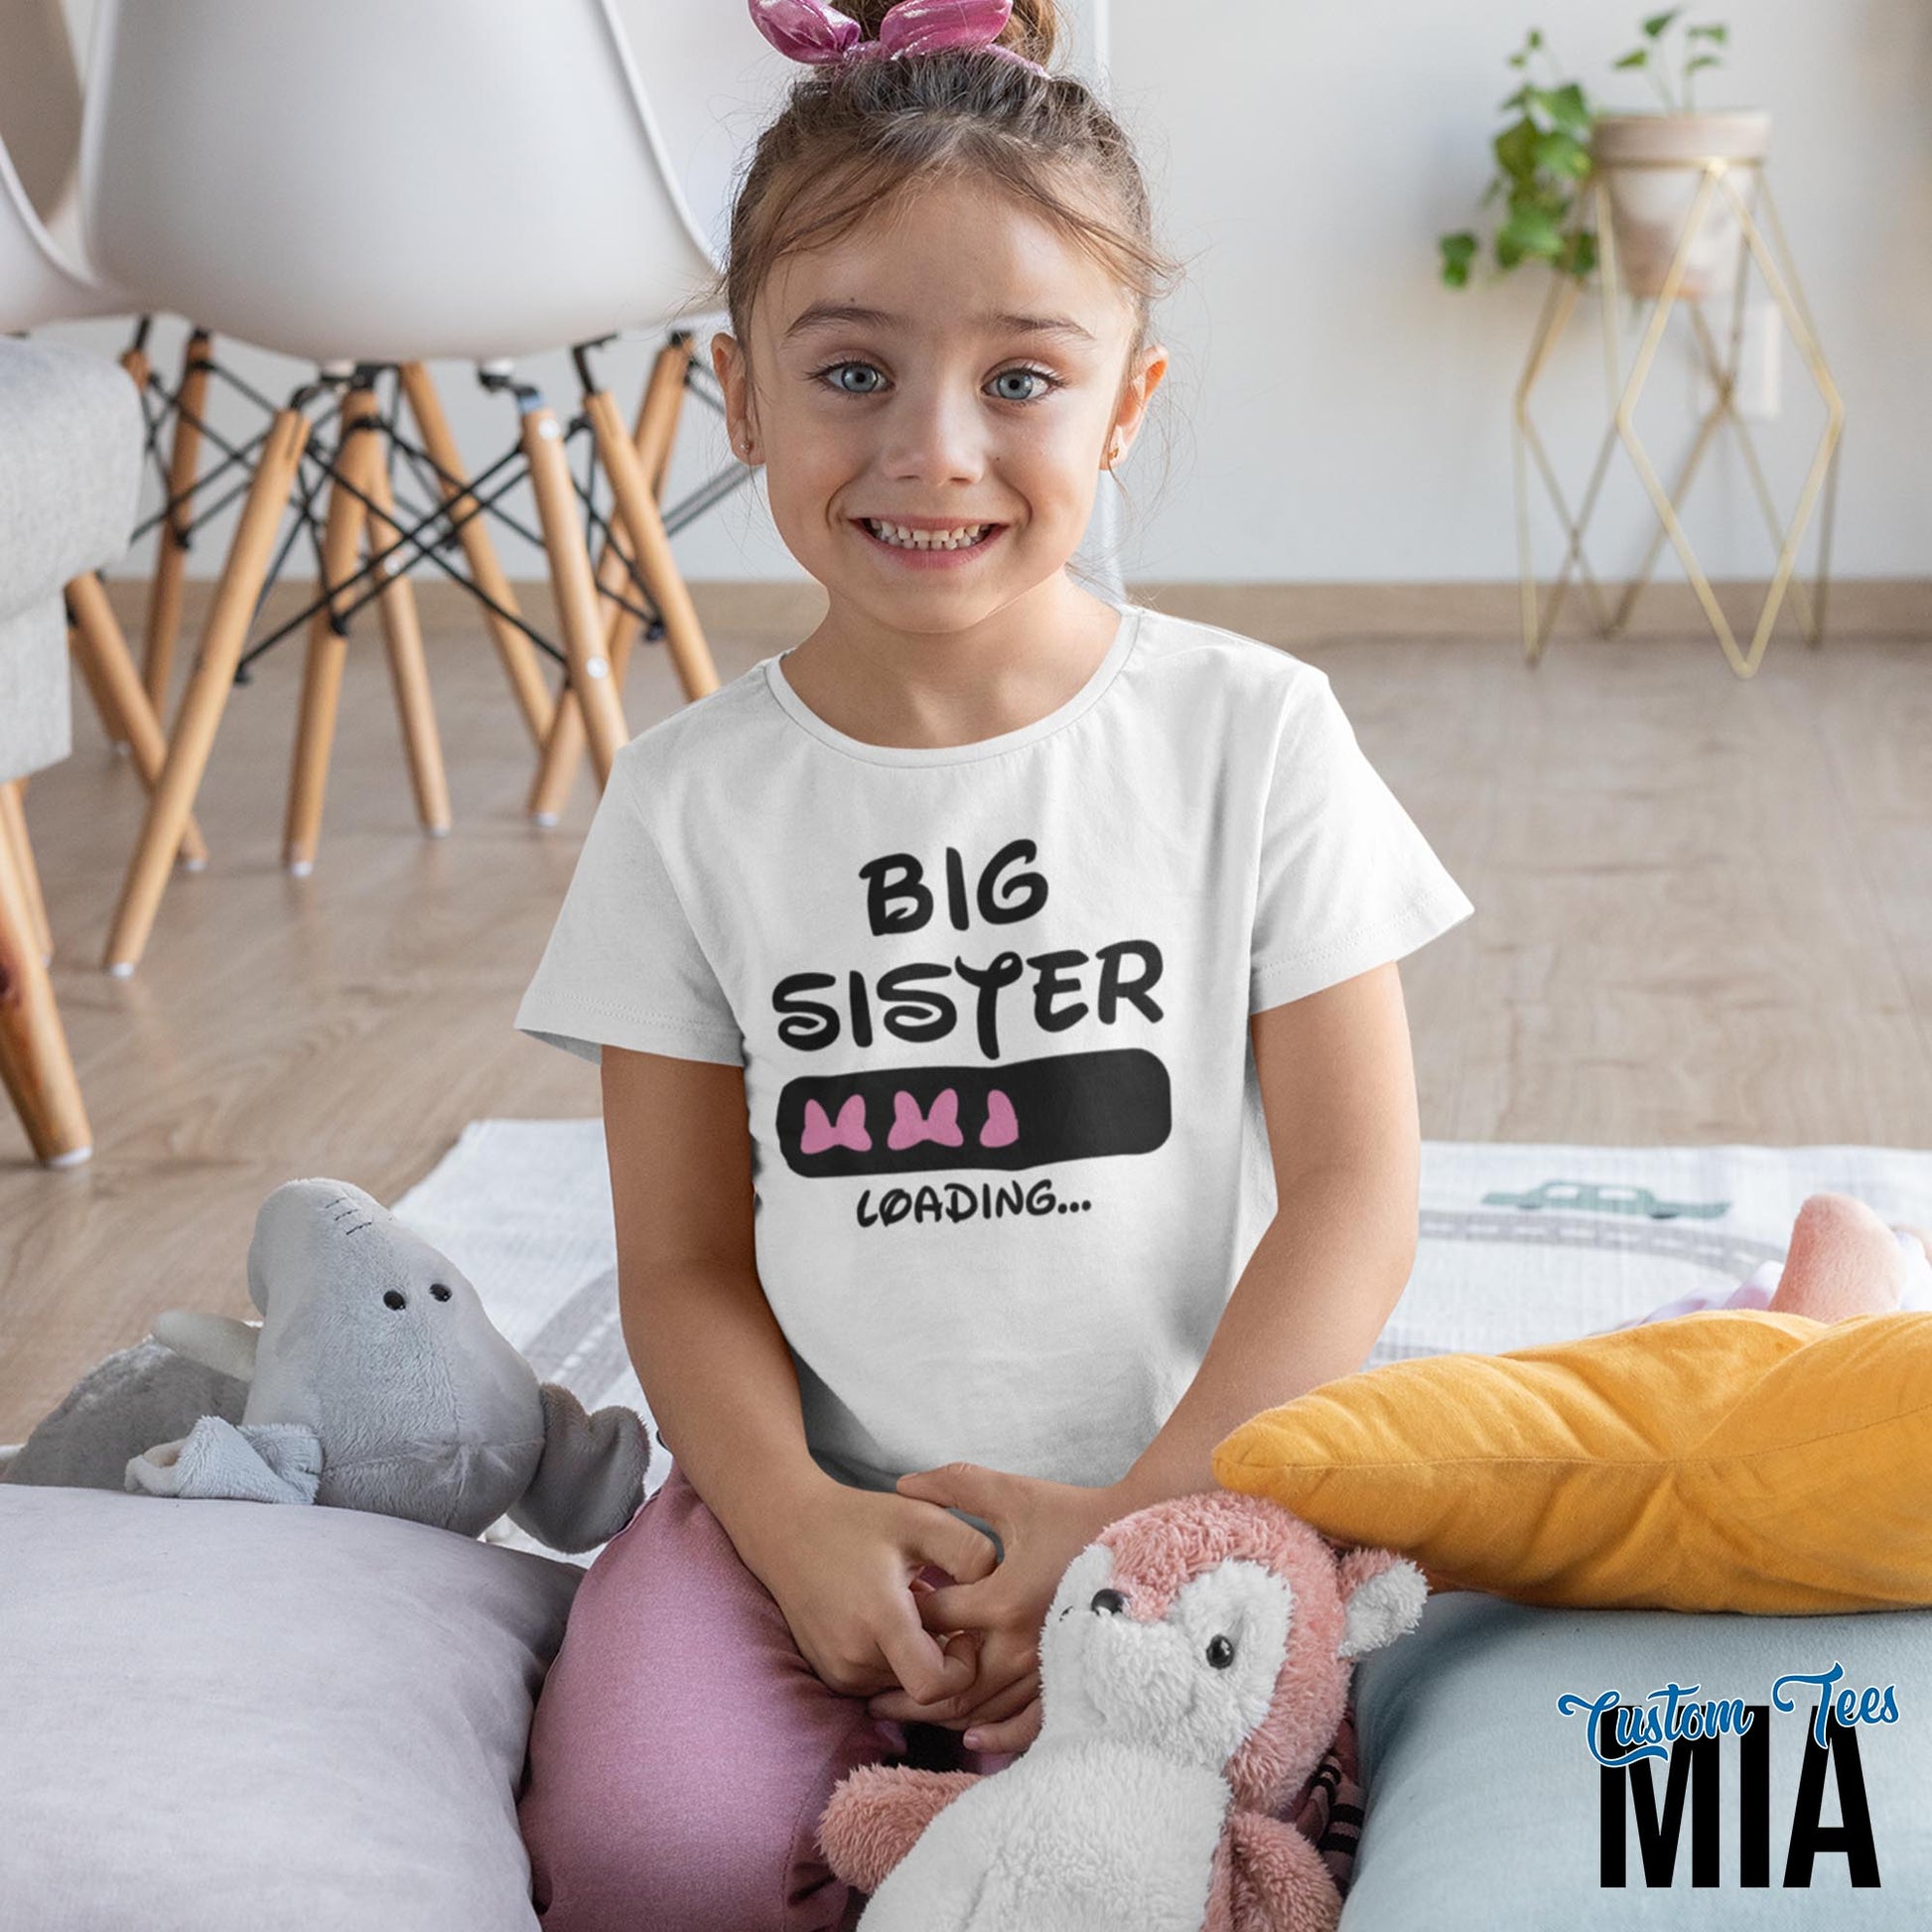 Big Brother & Big Sister Loading Shirt - Custom Tees MIA